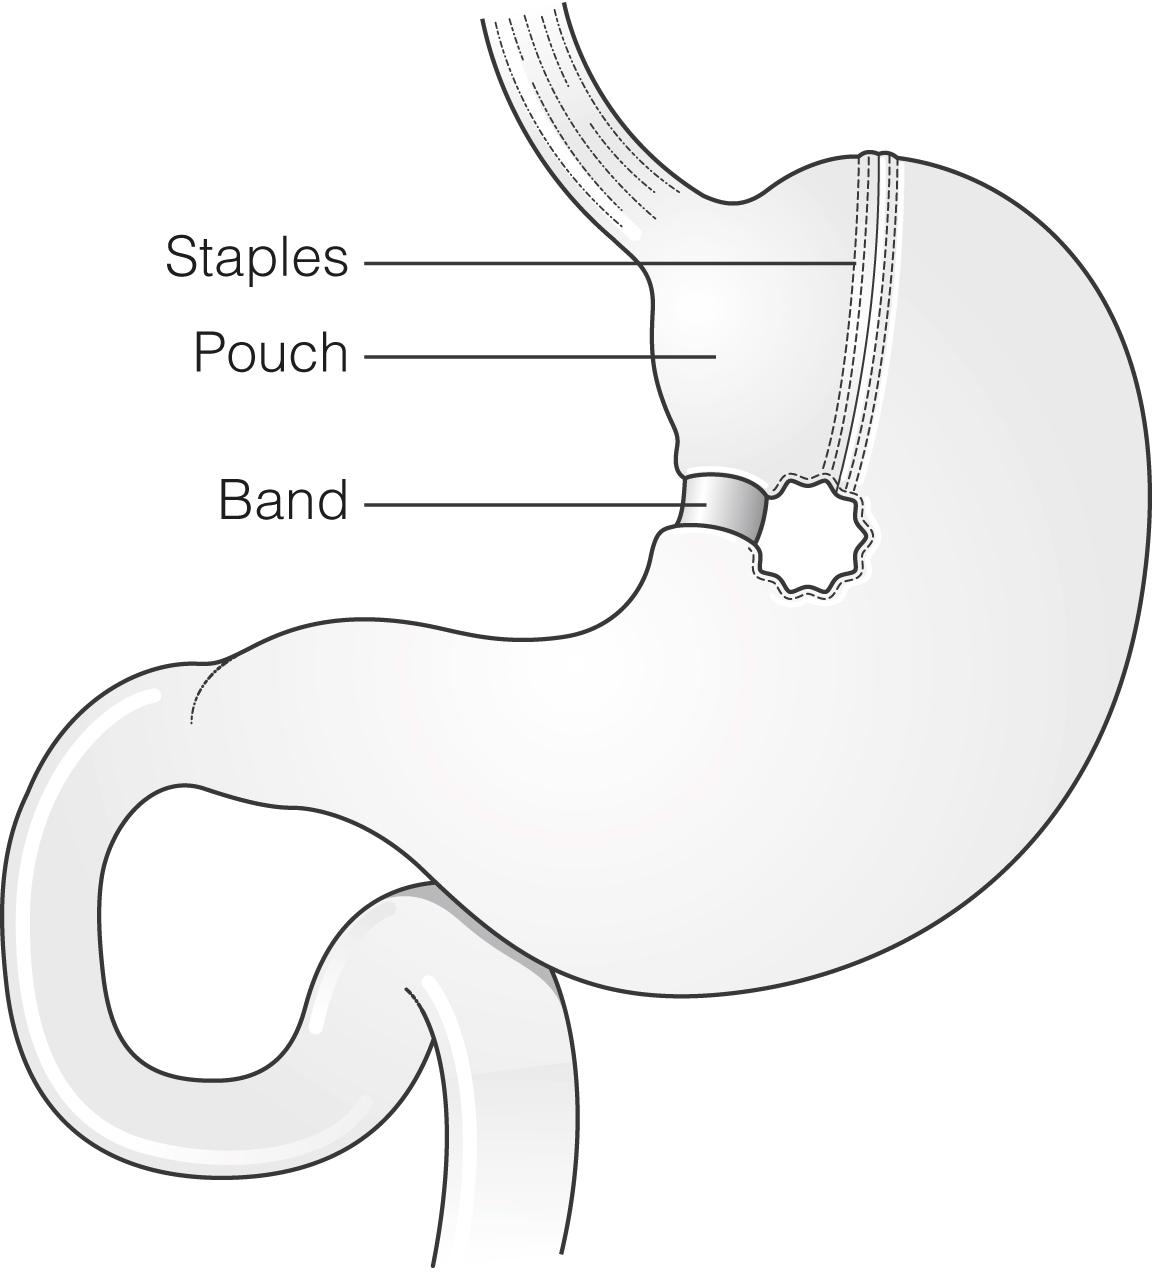 Figure 21.6, Diagram of the vertical banded gastroplasty procedure.